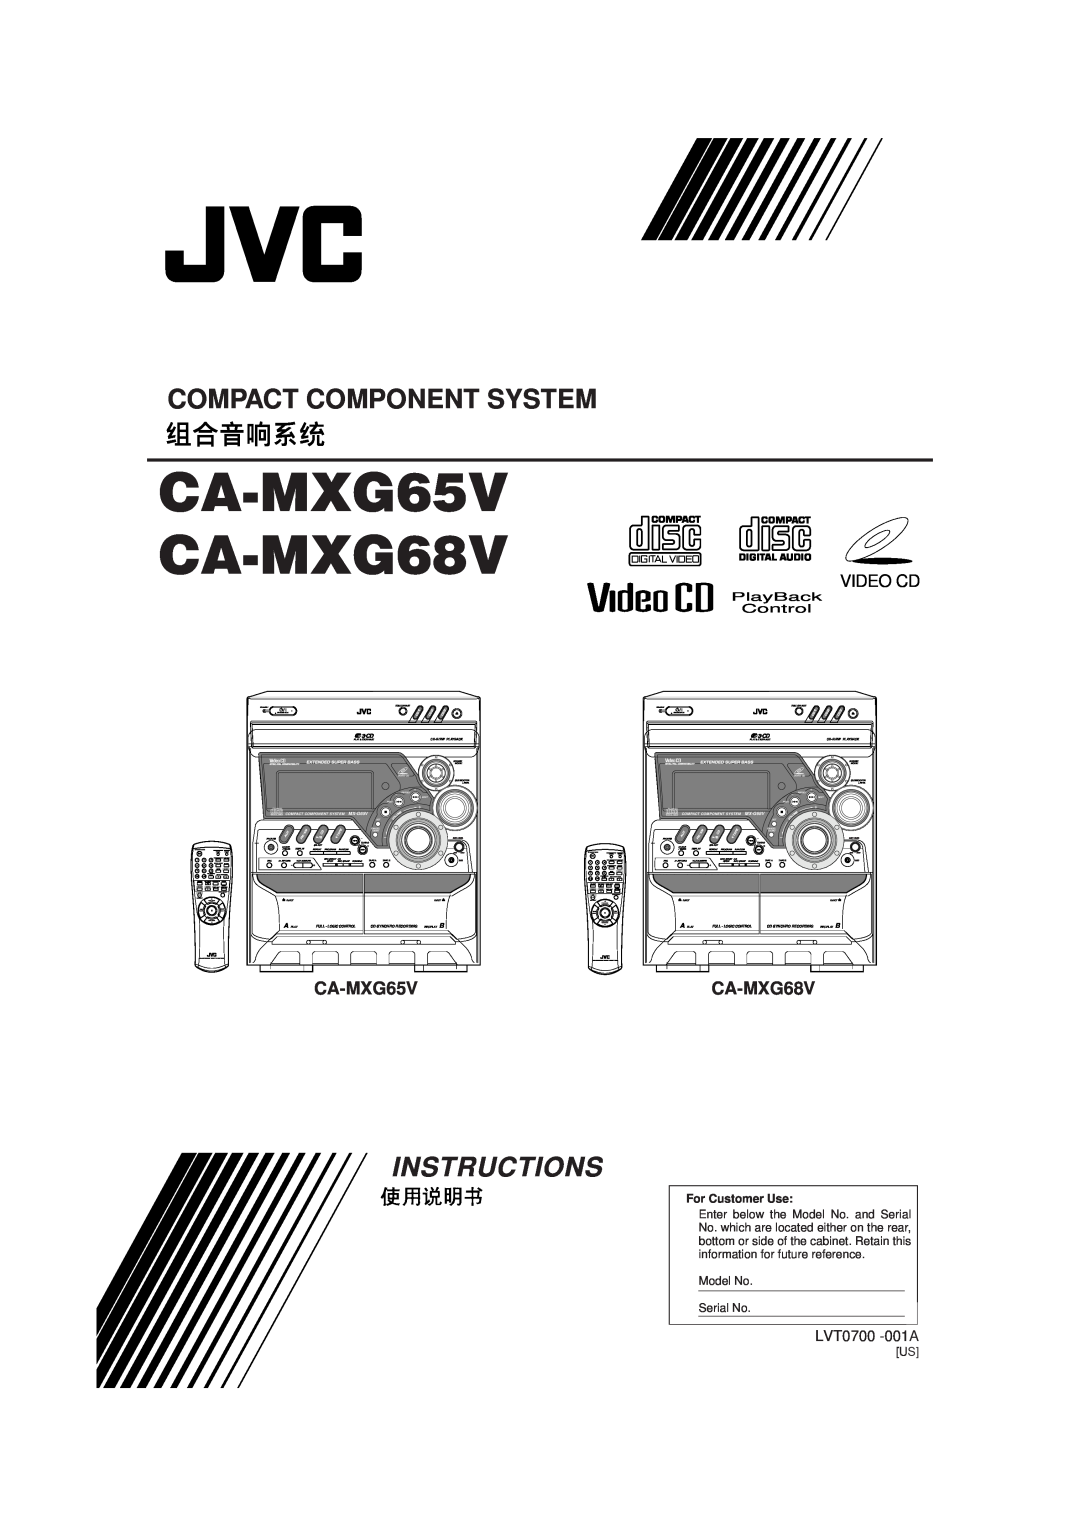 JVC manual Instructions, LVT0700 -001A, CA-MXG65V CA-MXG68V, Compact Component System, Video Cd, PlayBack Control 